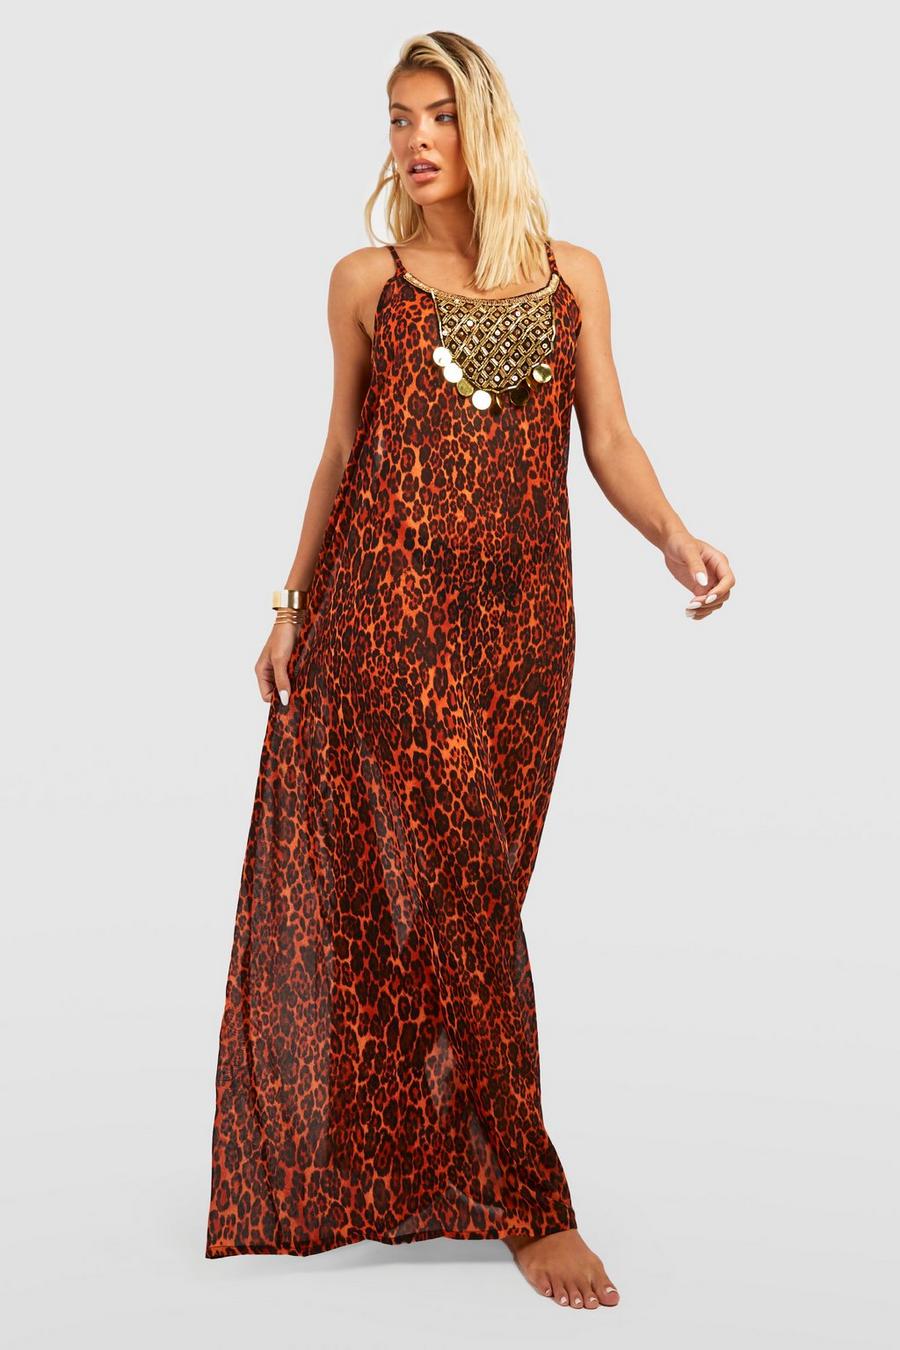 Leopard Print Beaded Beach Maxi Dress